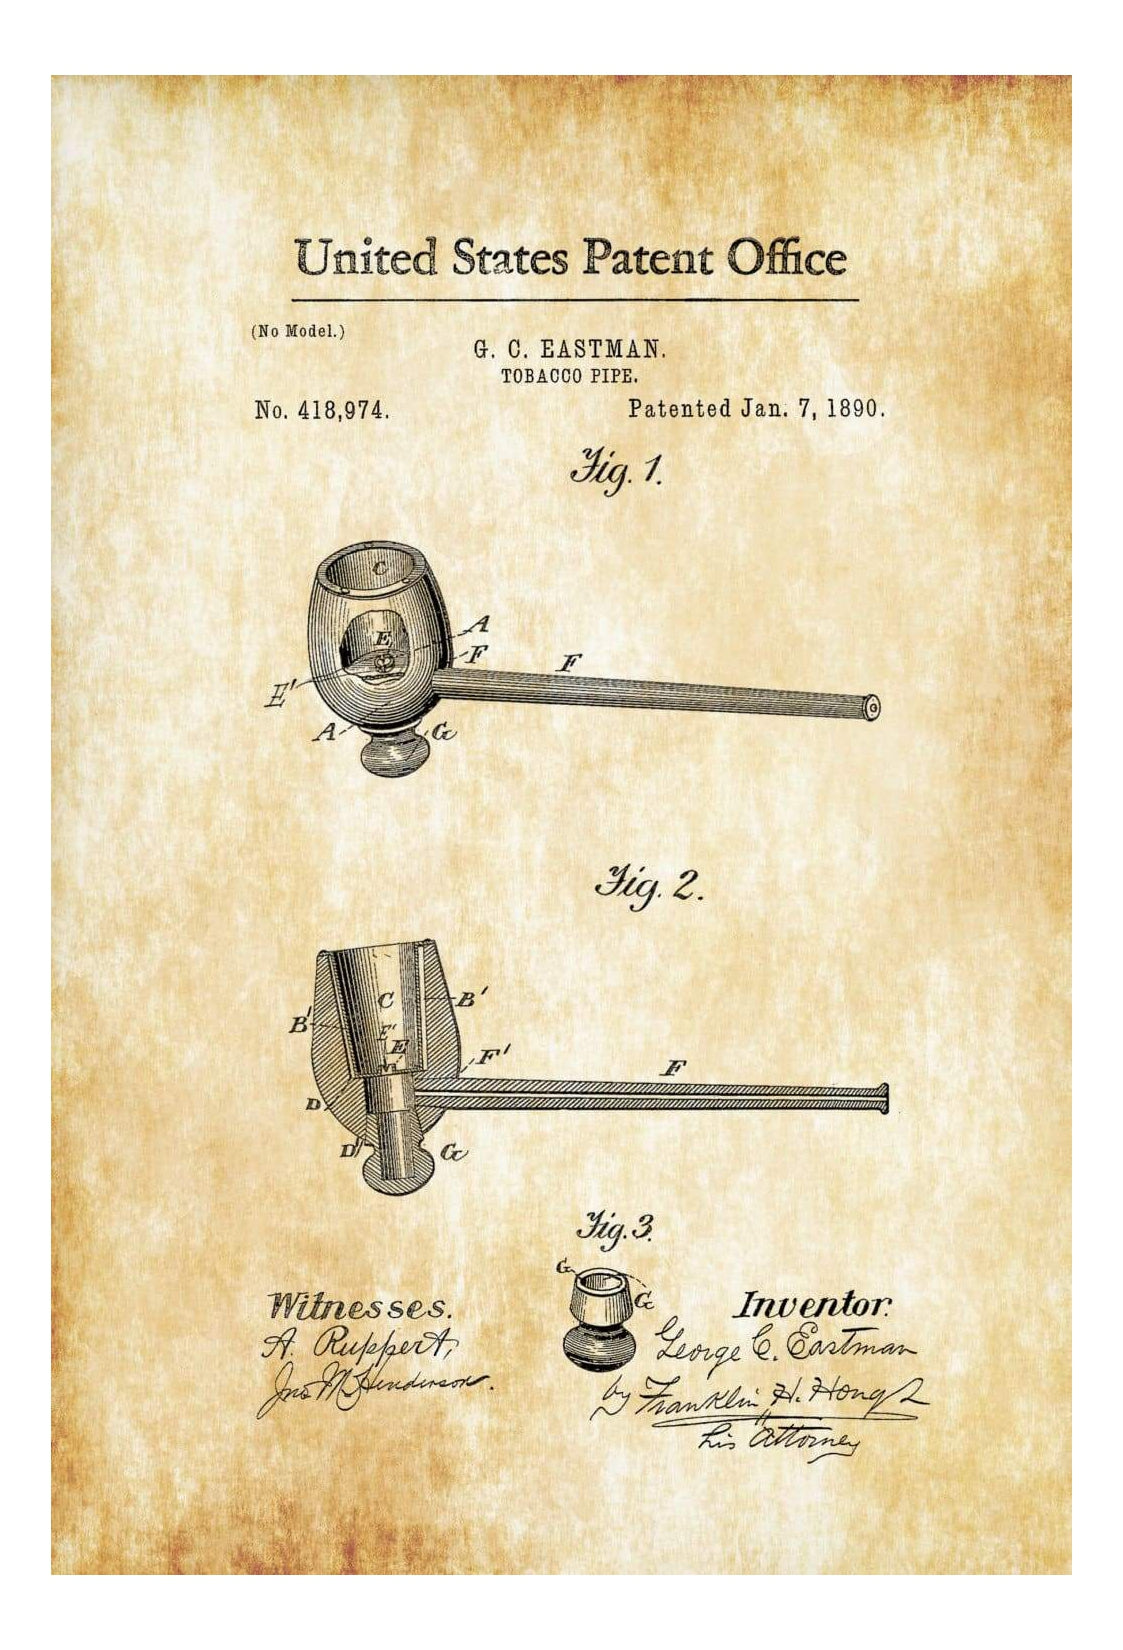 Bong Smoking Pipe Patent 1980 - Charcoal Metal Print by Aged Pixel - Fine  Art America